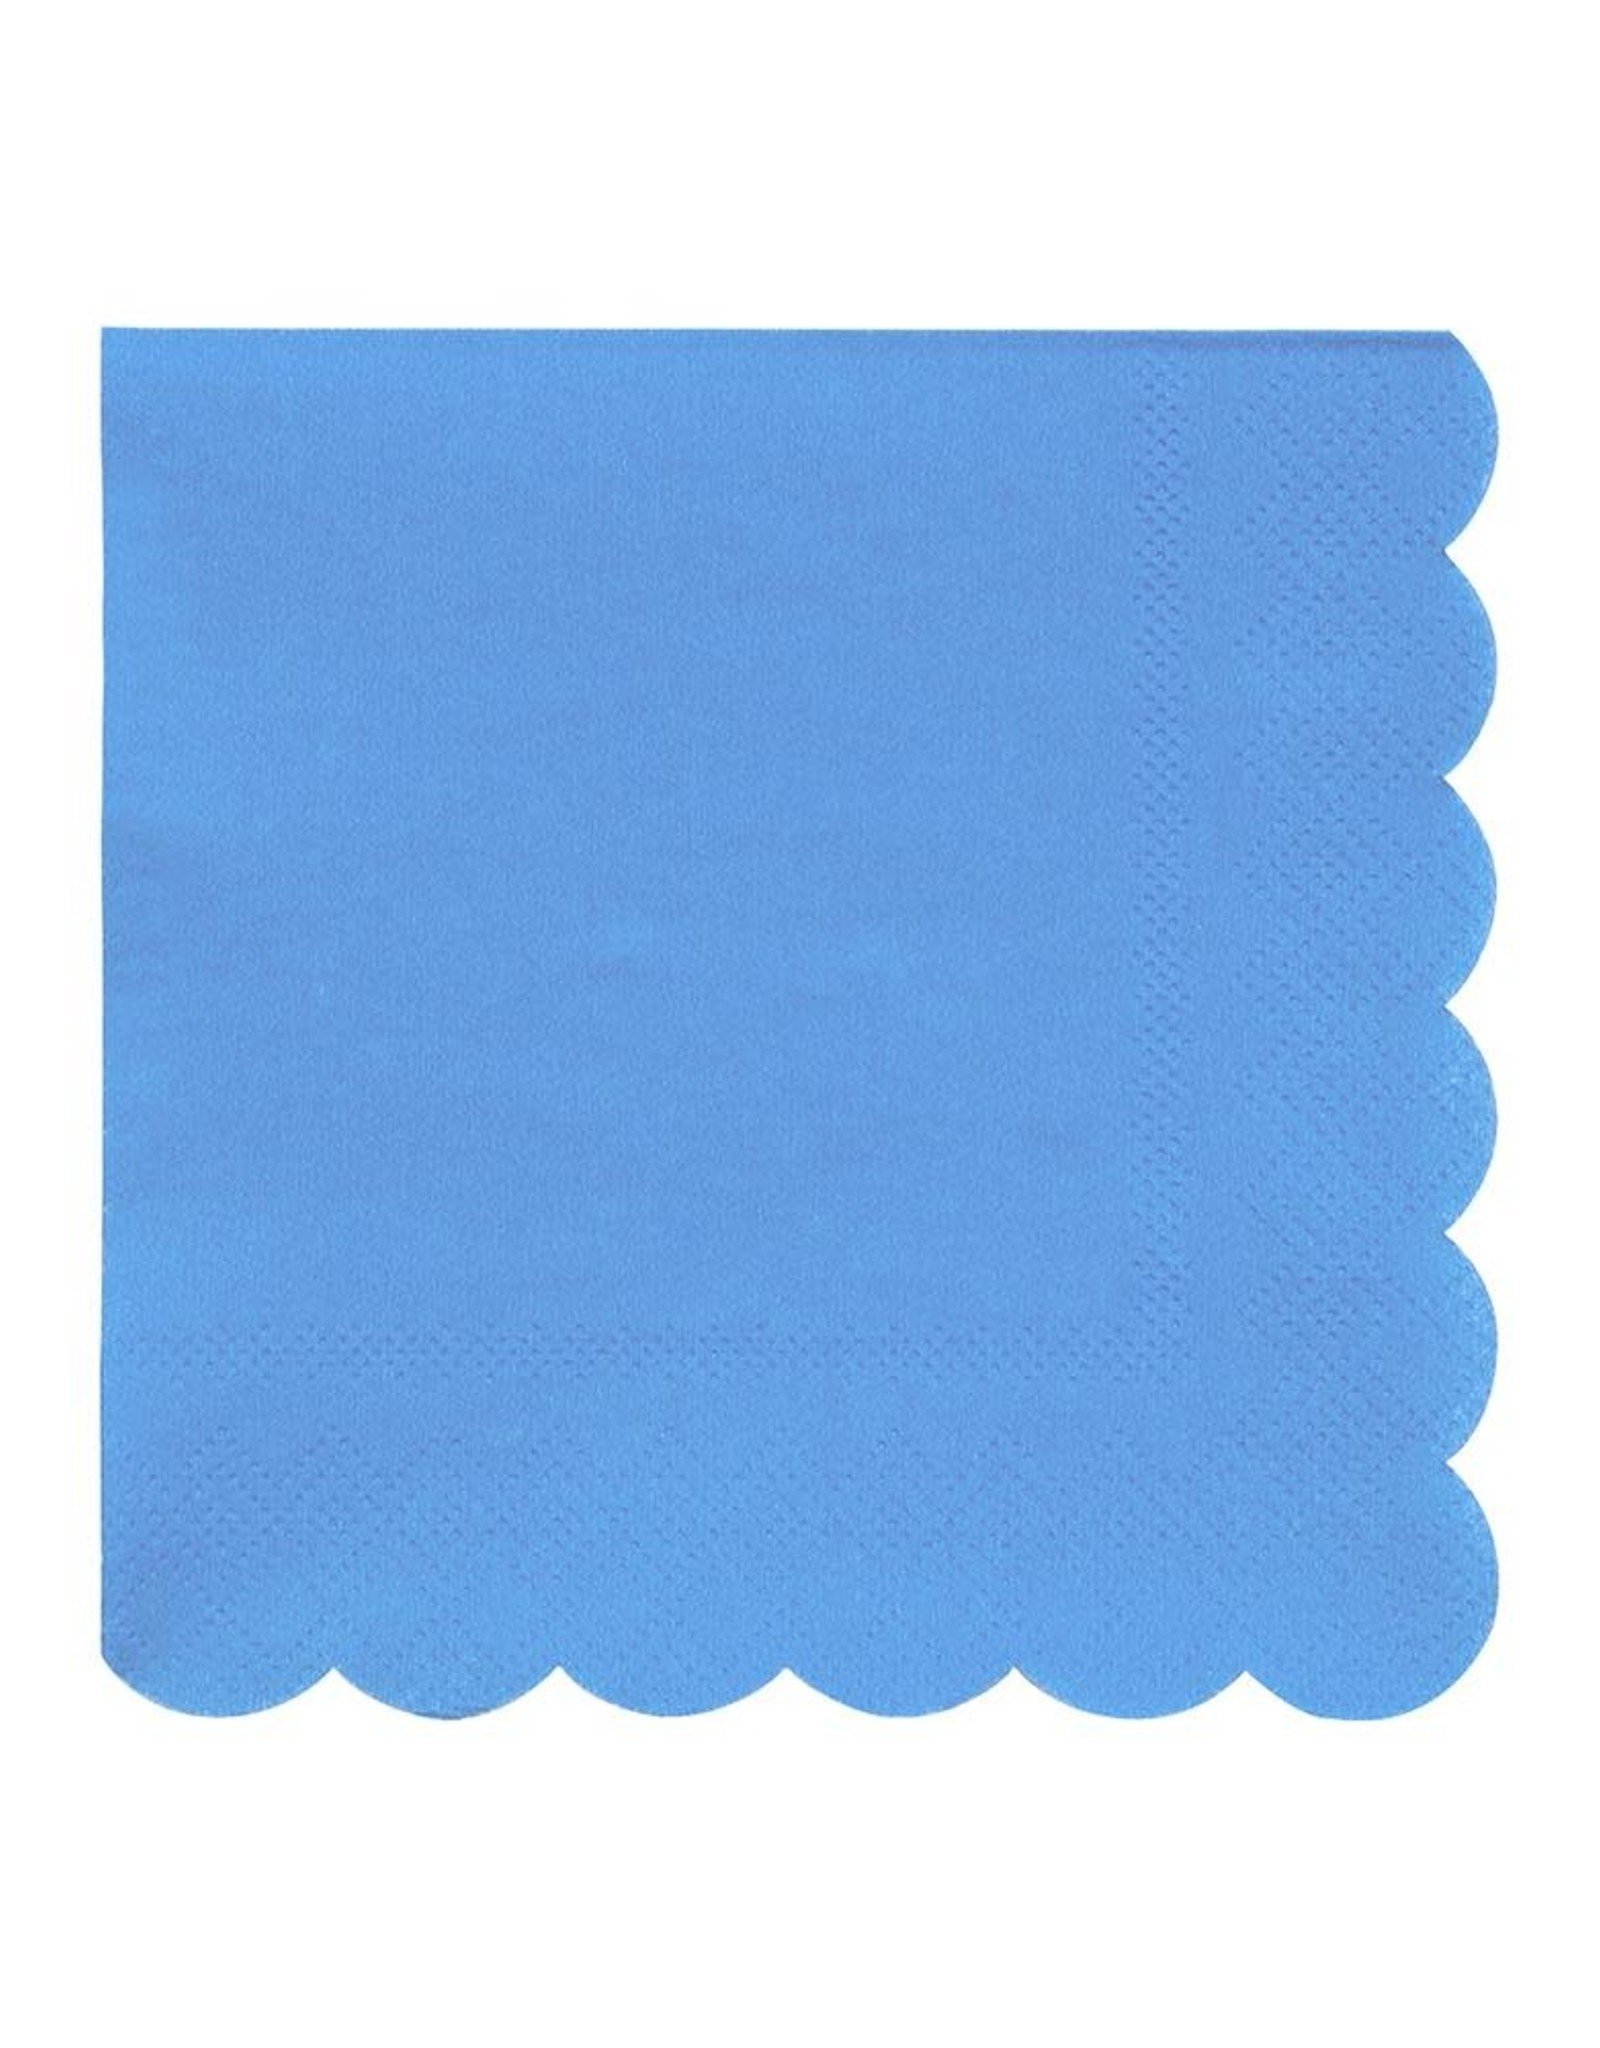 Meri Meri bright blue napkins- small